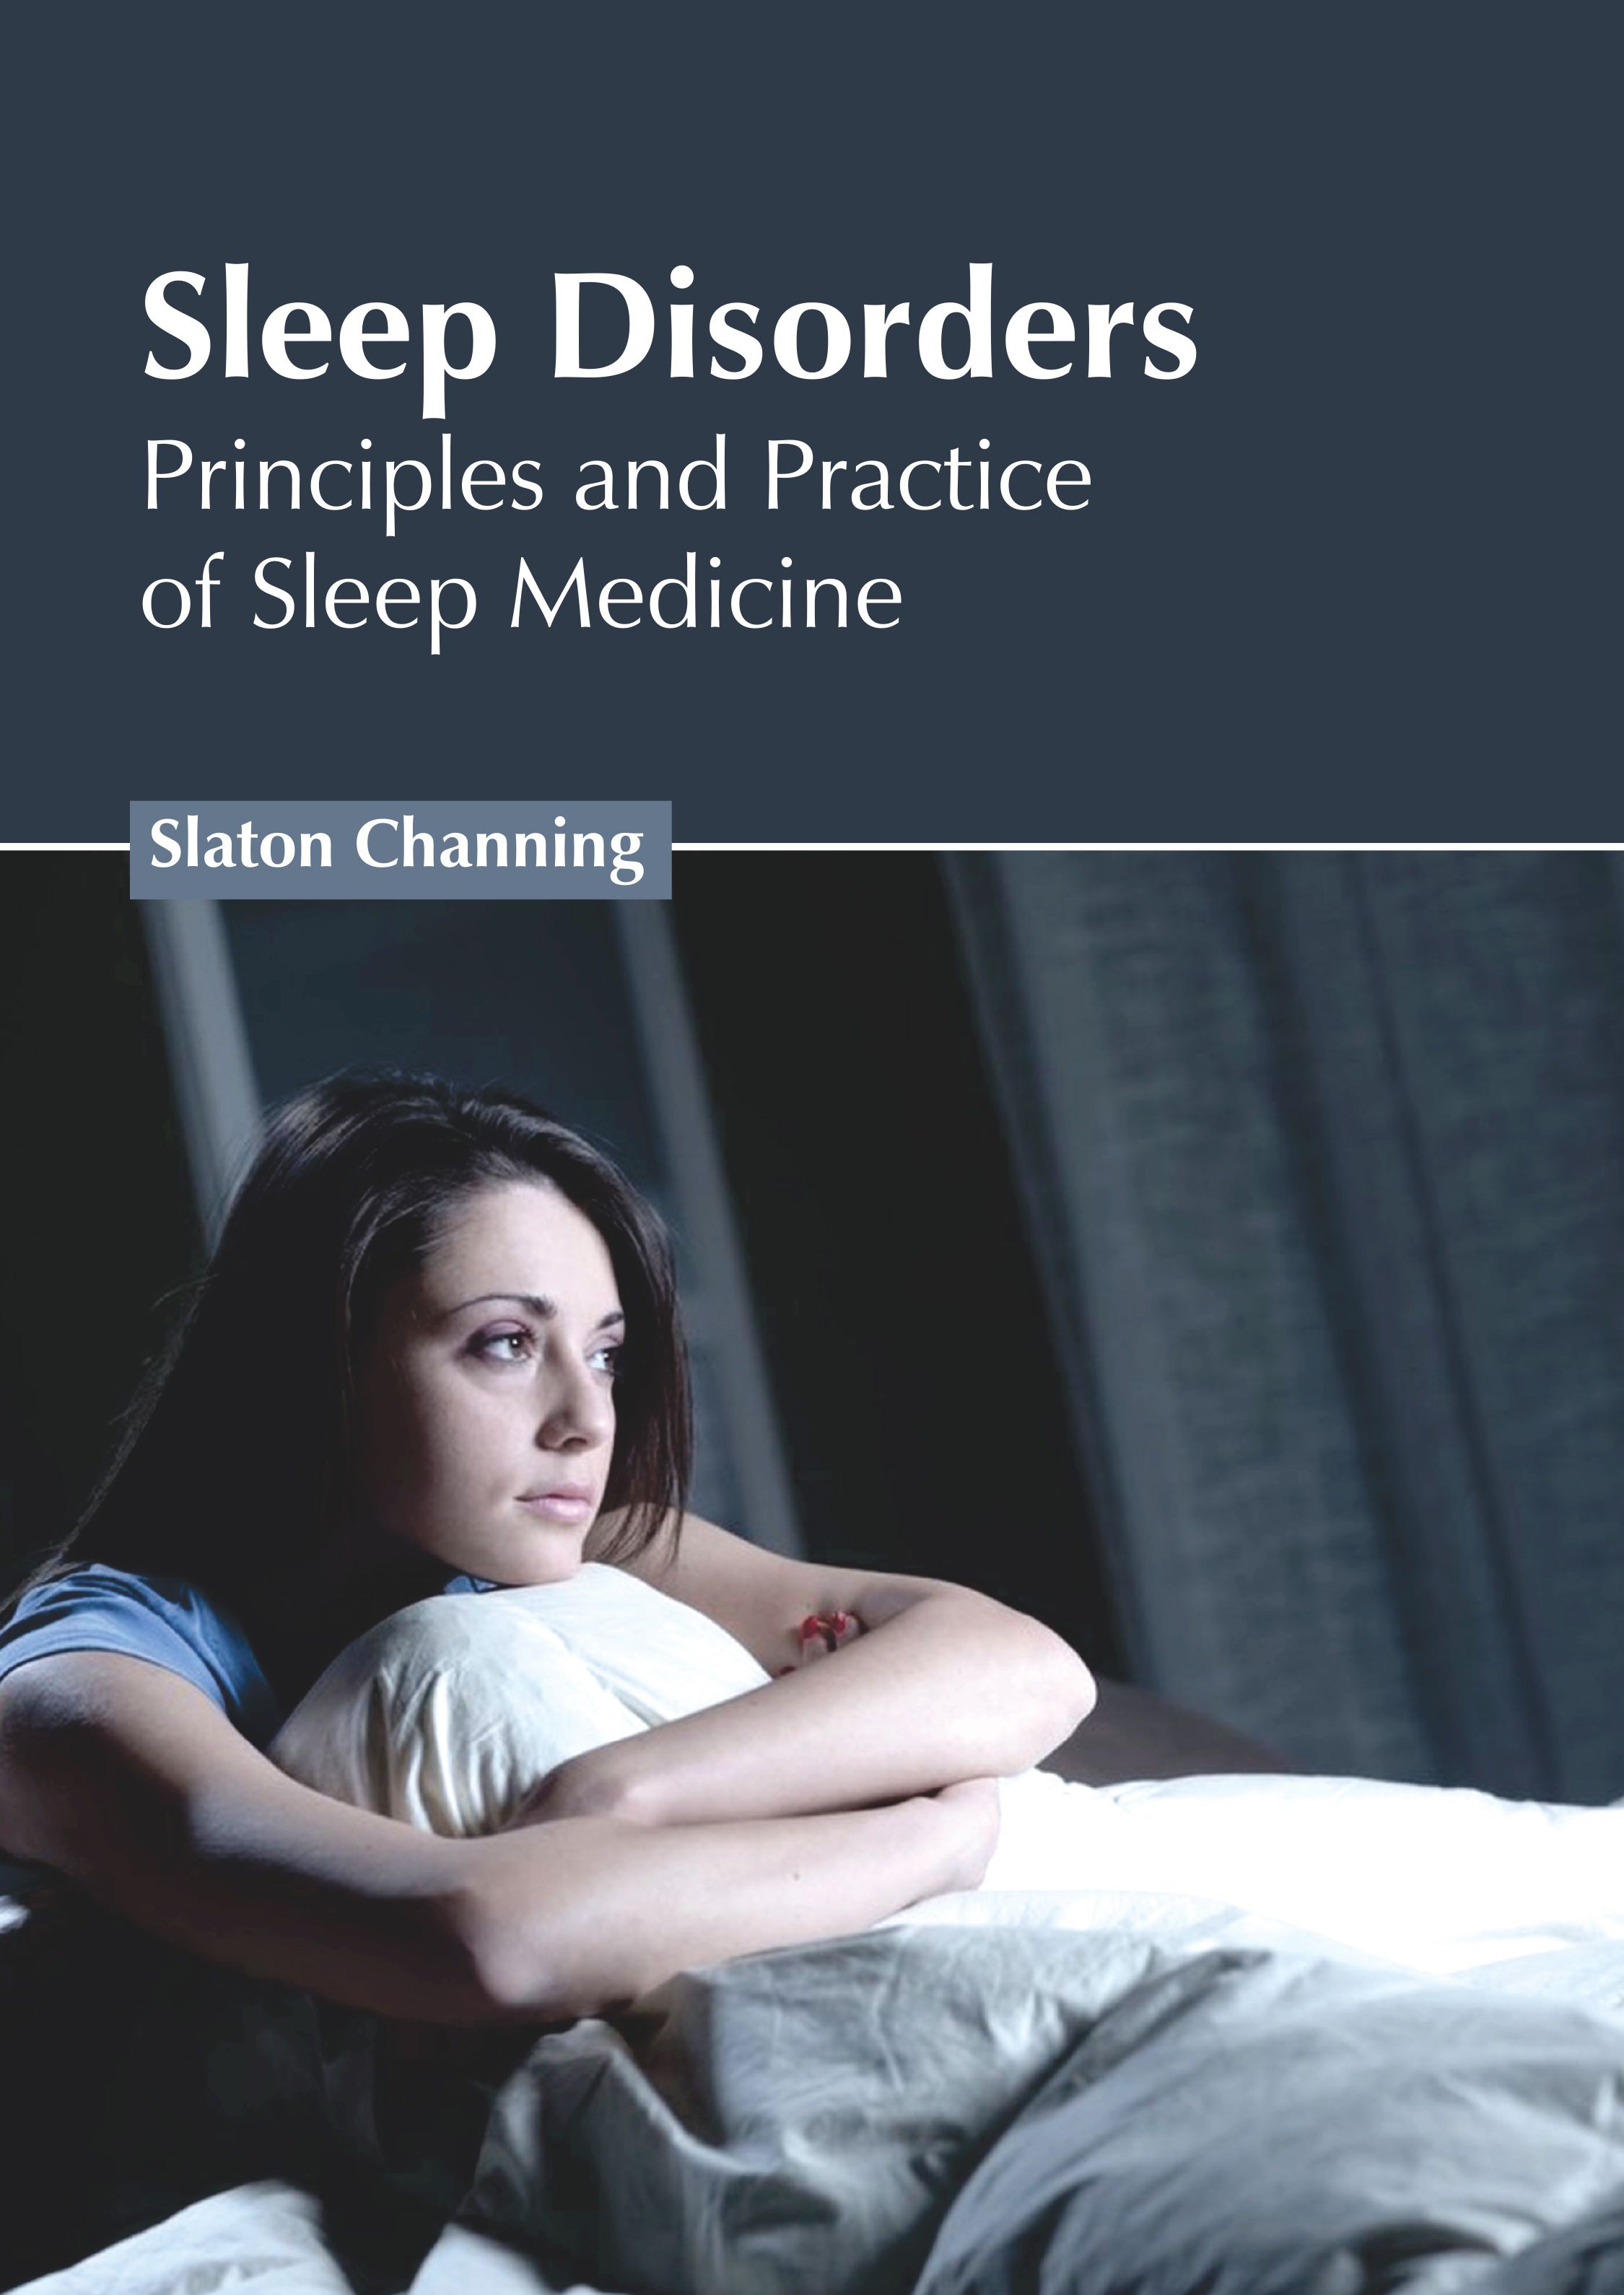 SLEEP DISORDERS: PRINCIPLES AND PRACTICE OF SLEEP MEDICINE